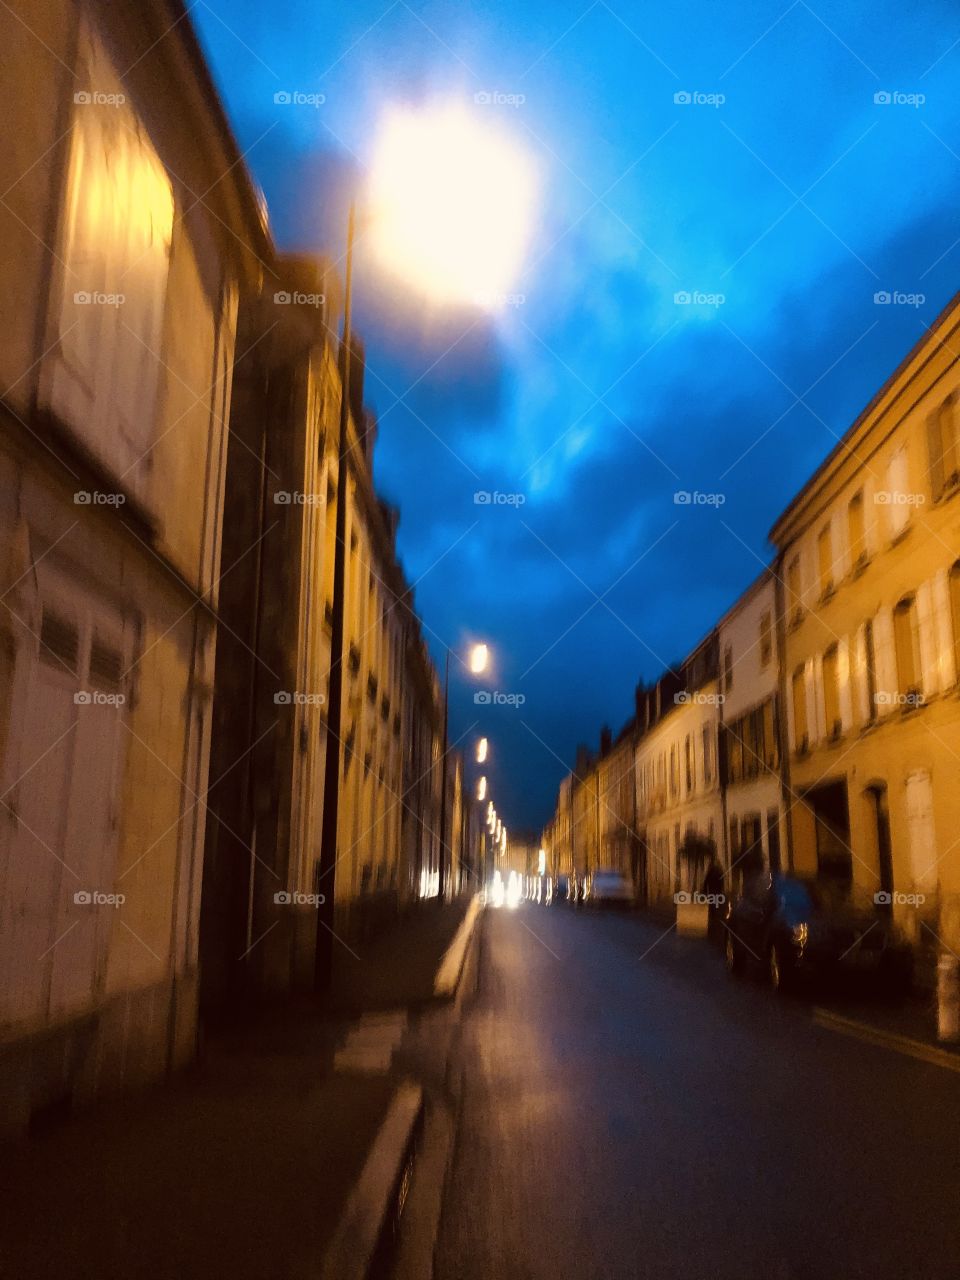 Midnight in paris streets 